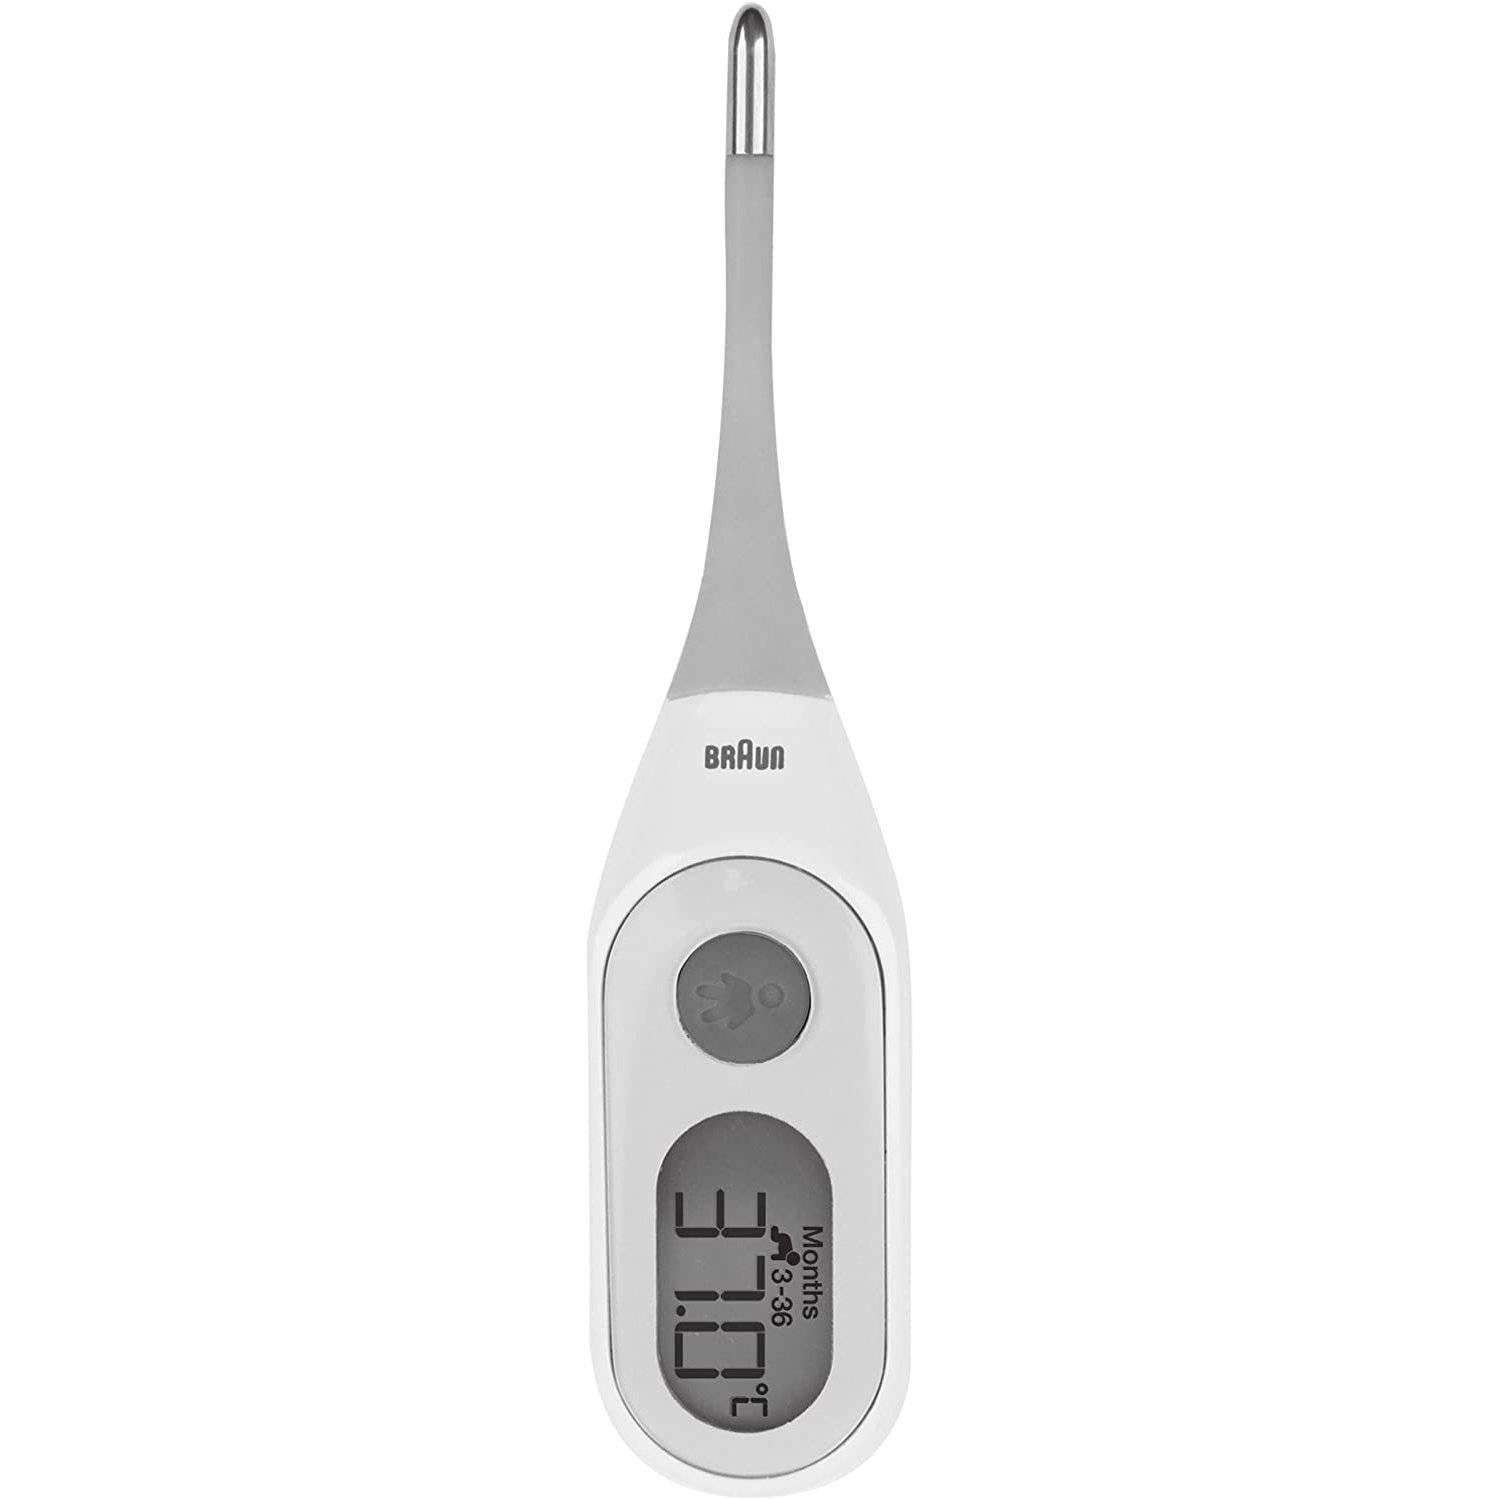 Braun PRT2000 Age Precision Stick Digital Thermometer - Healthxpress.ie